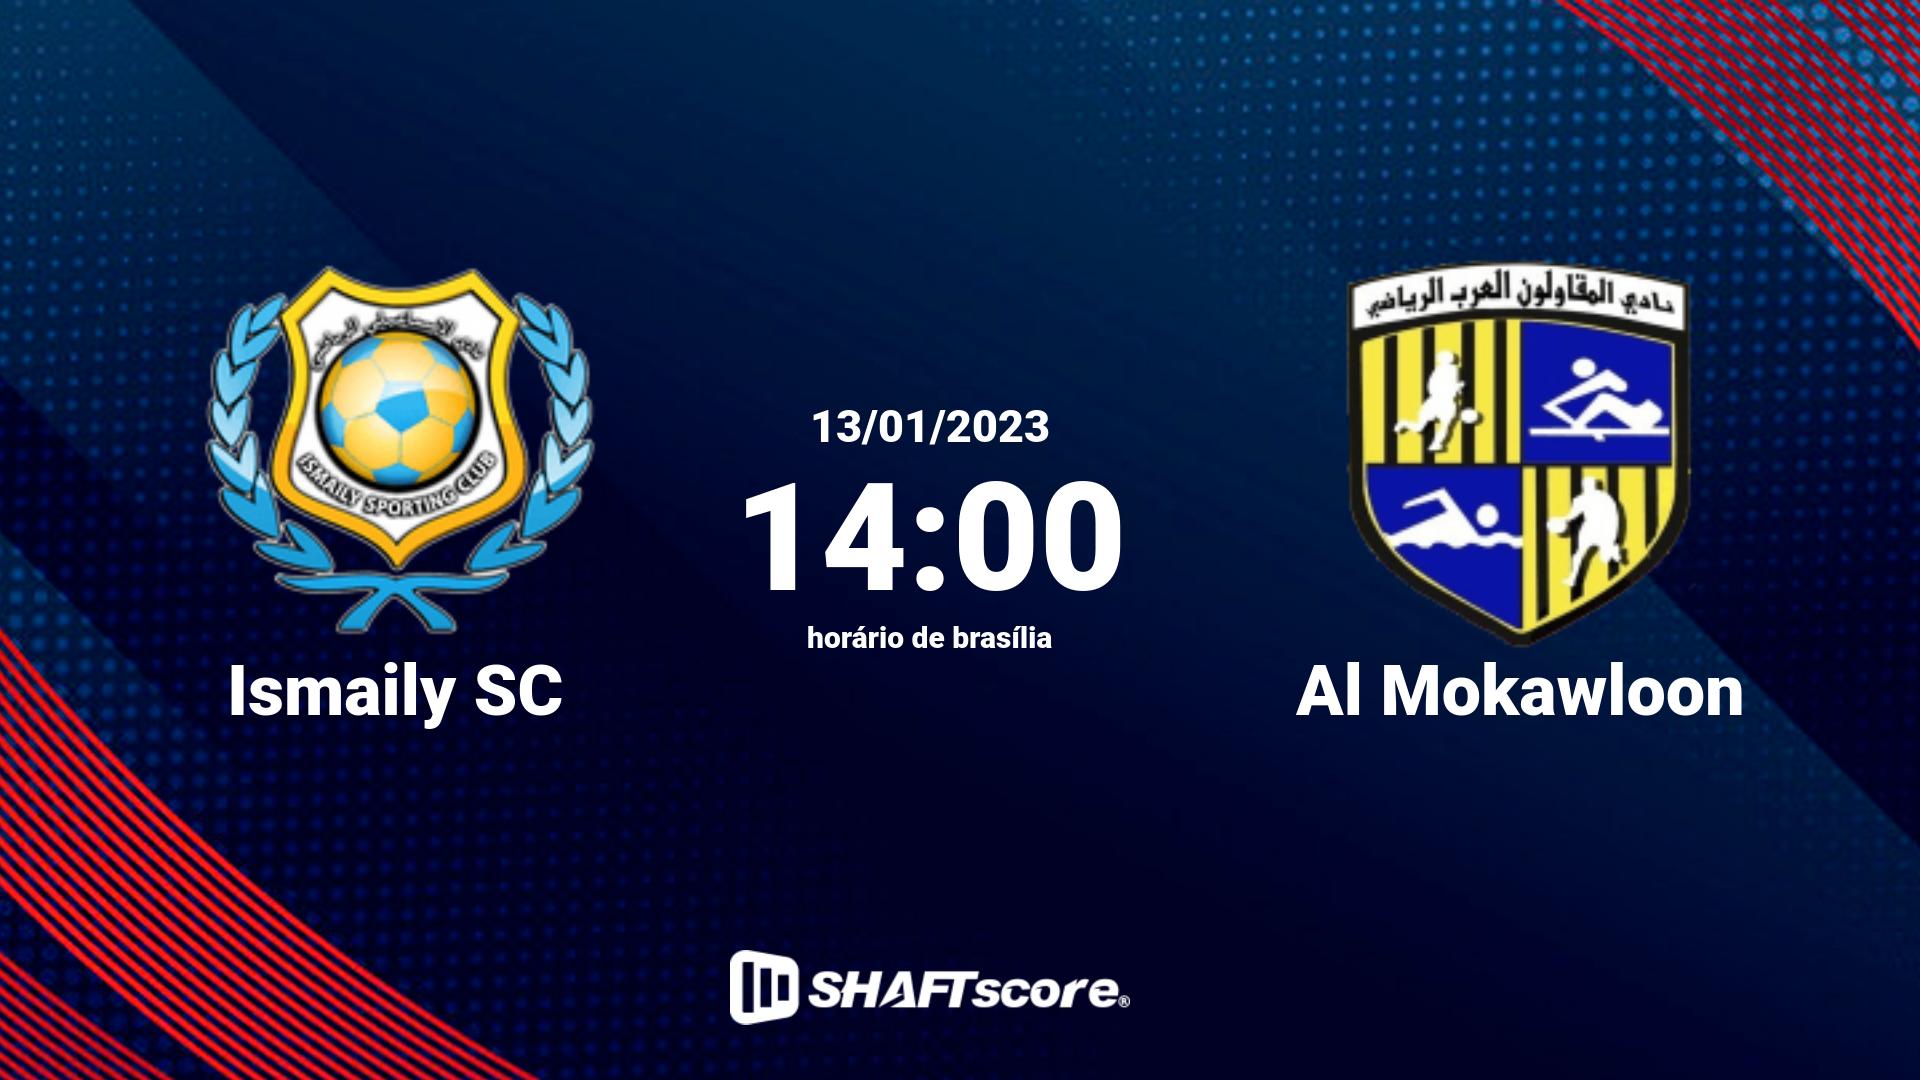 Estatísticas do jogo Ismaily SC vs Al Mokawloon 13.01 14:00